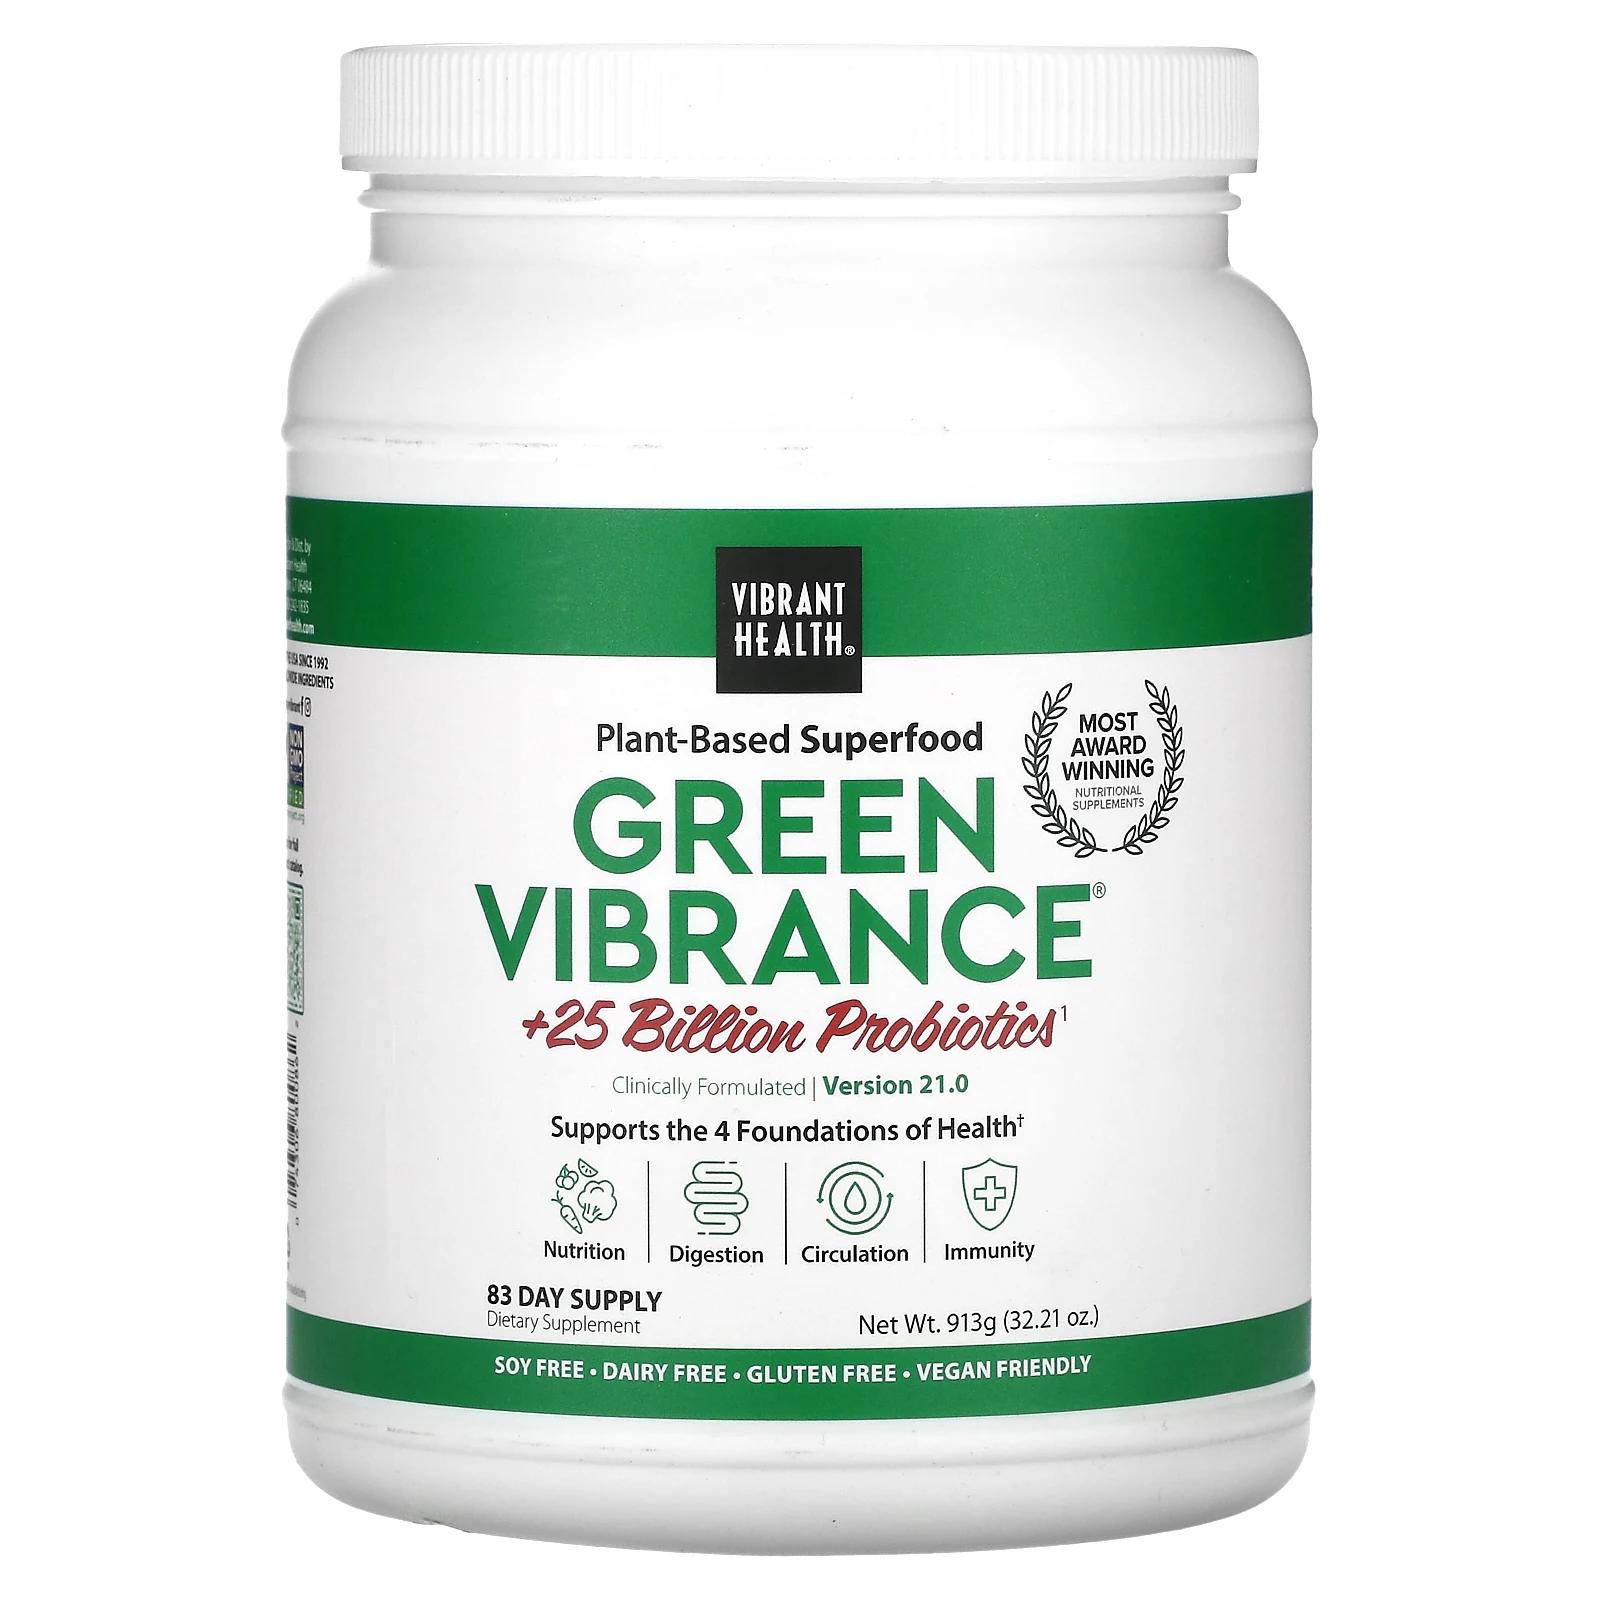 Vibrant Health Green Vibrance +25 млрд пробиотиков версия 17.0 35,27 унц. (1 кг) vibrant health ut vibrance d манноза 5000 мг версия 1 1 64 55 г